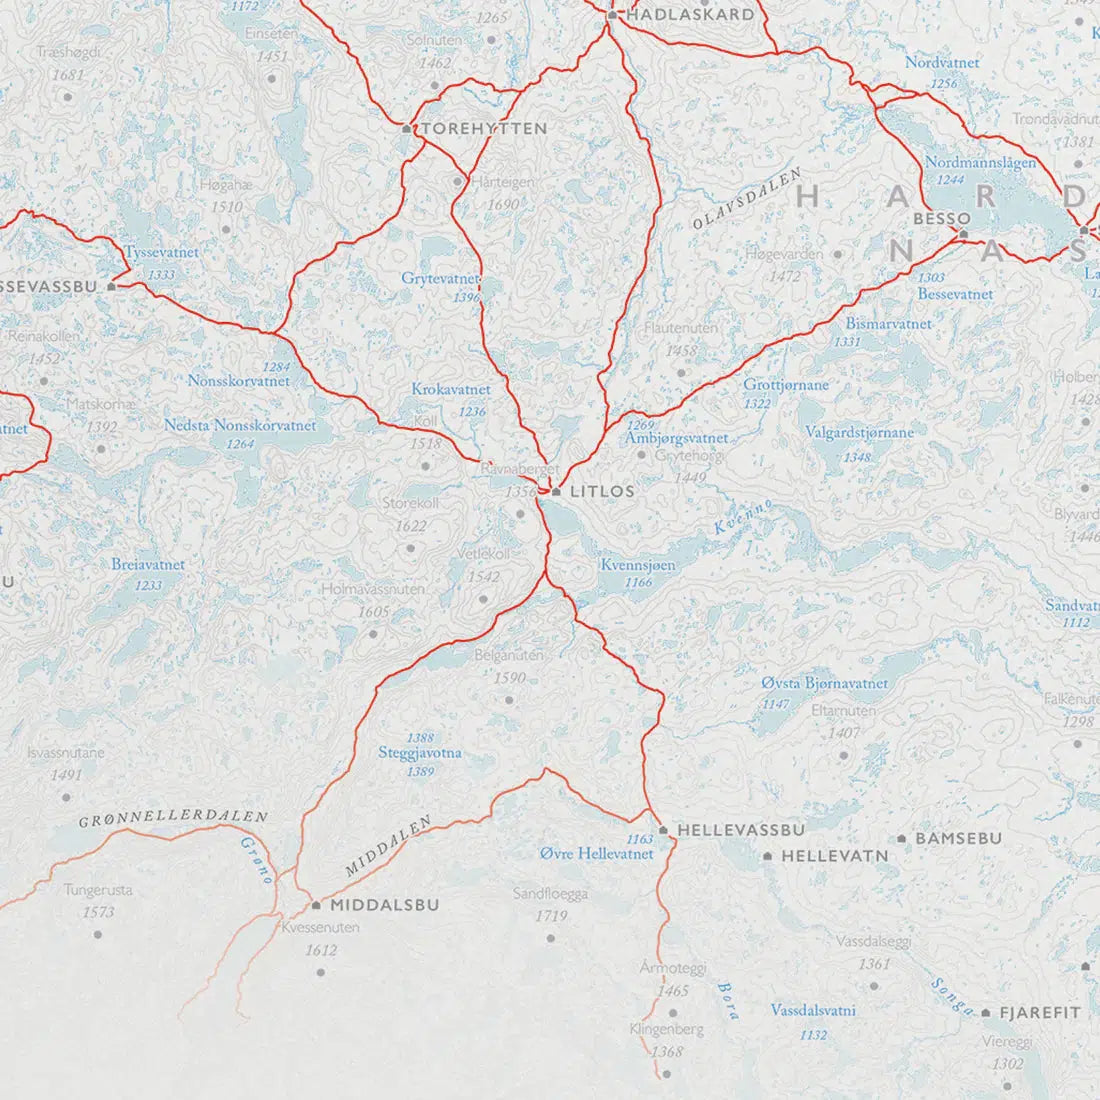 Hardangervidda turkart (50x70 cm)-Maps-Dapamaps-Hyttefeber